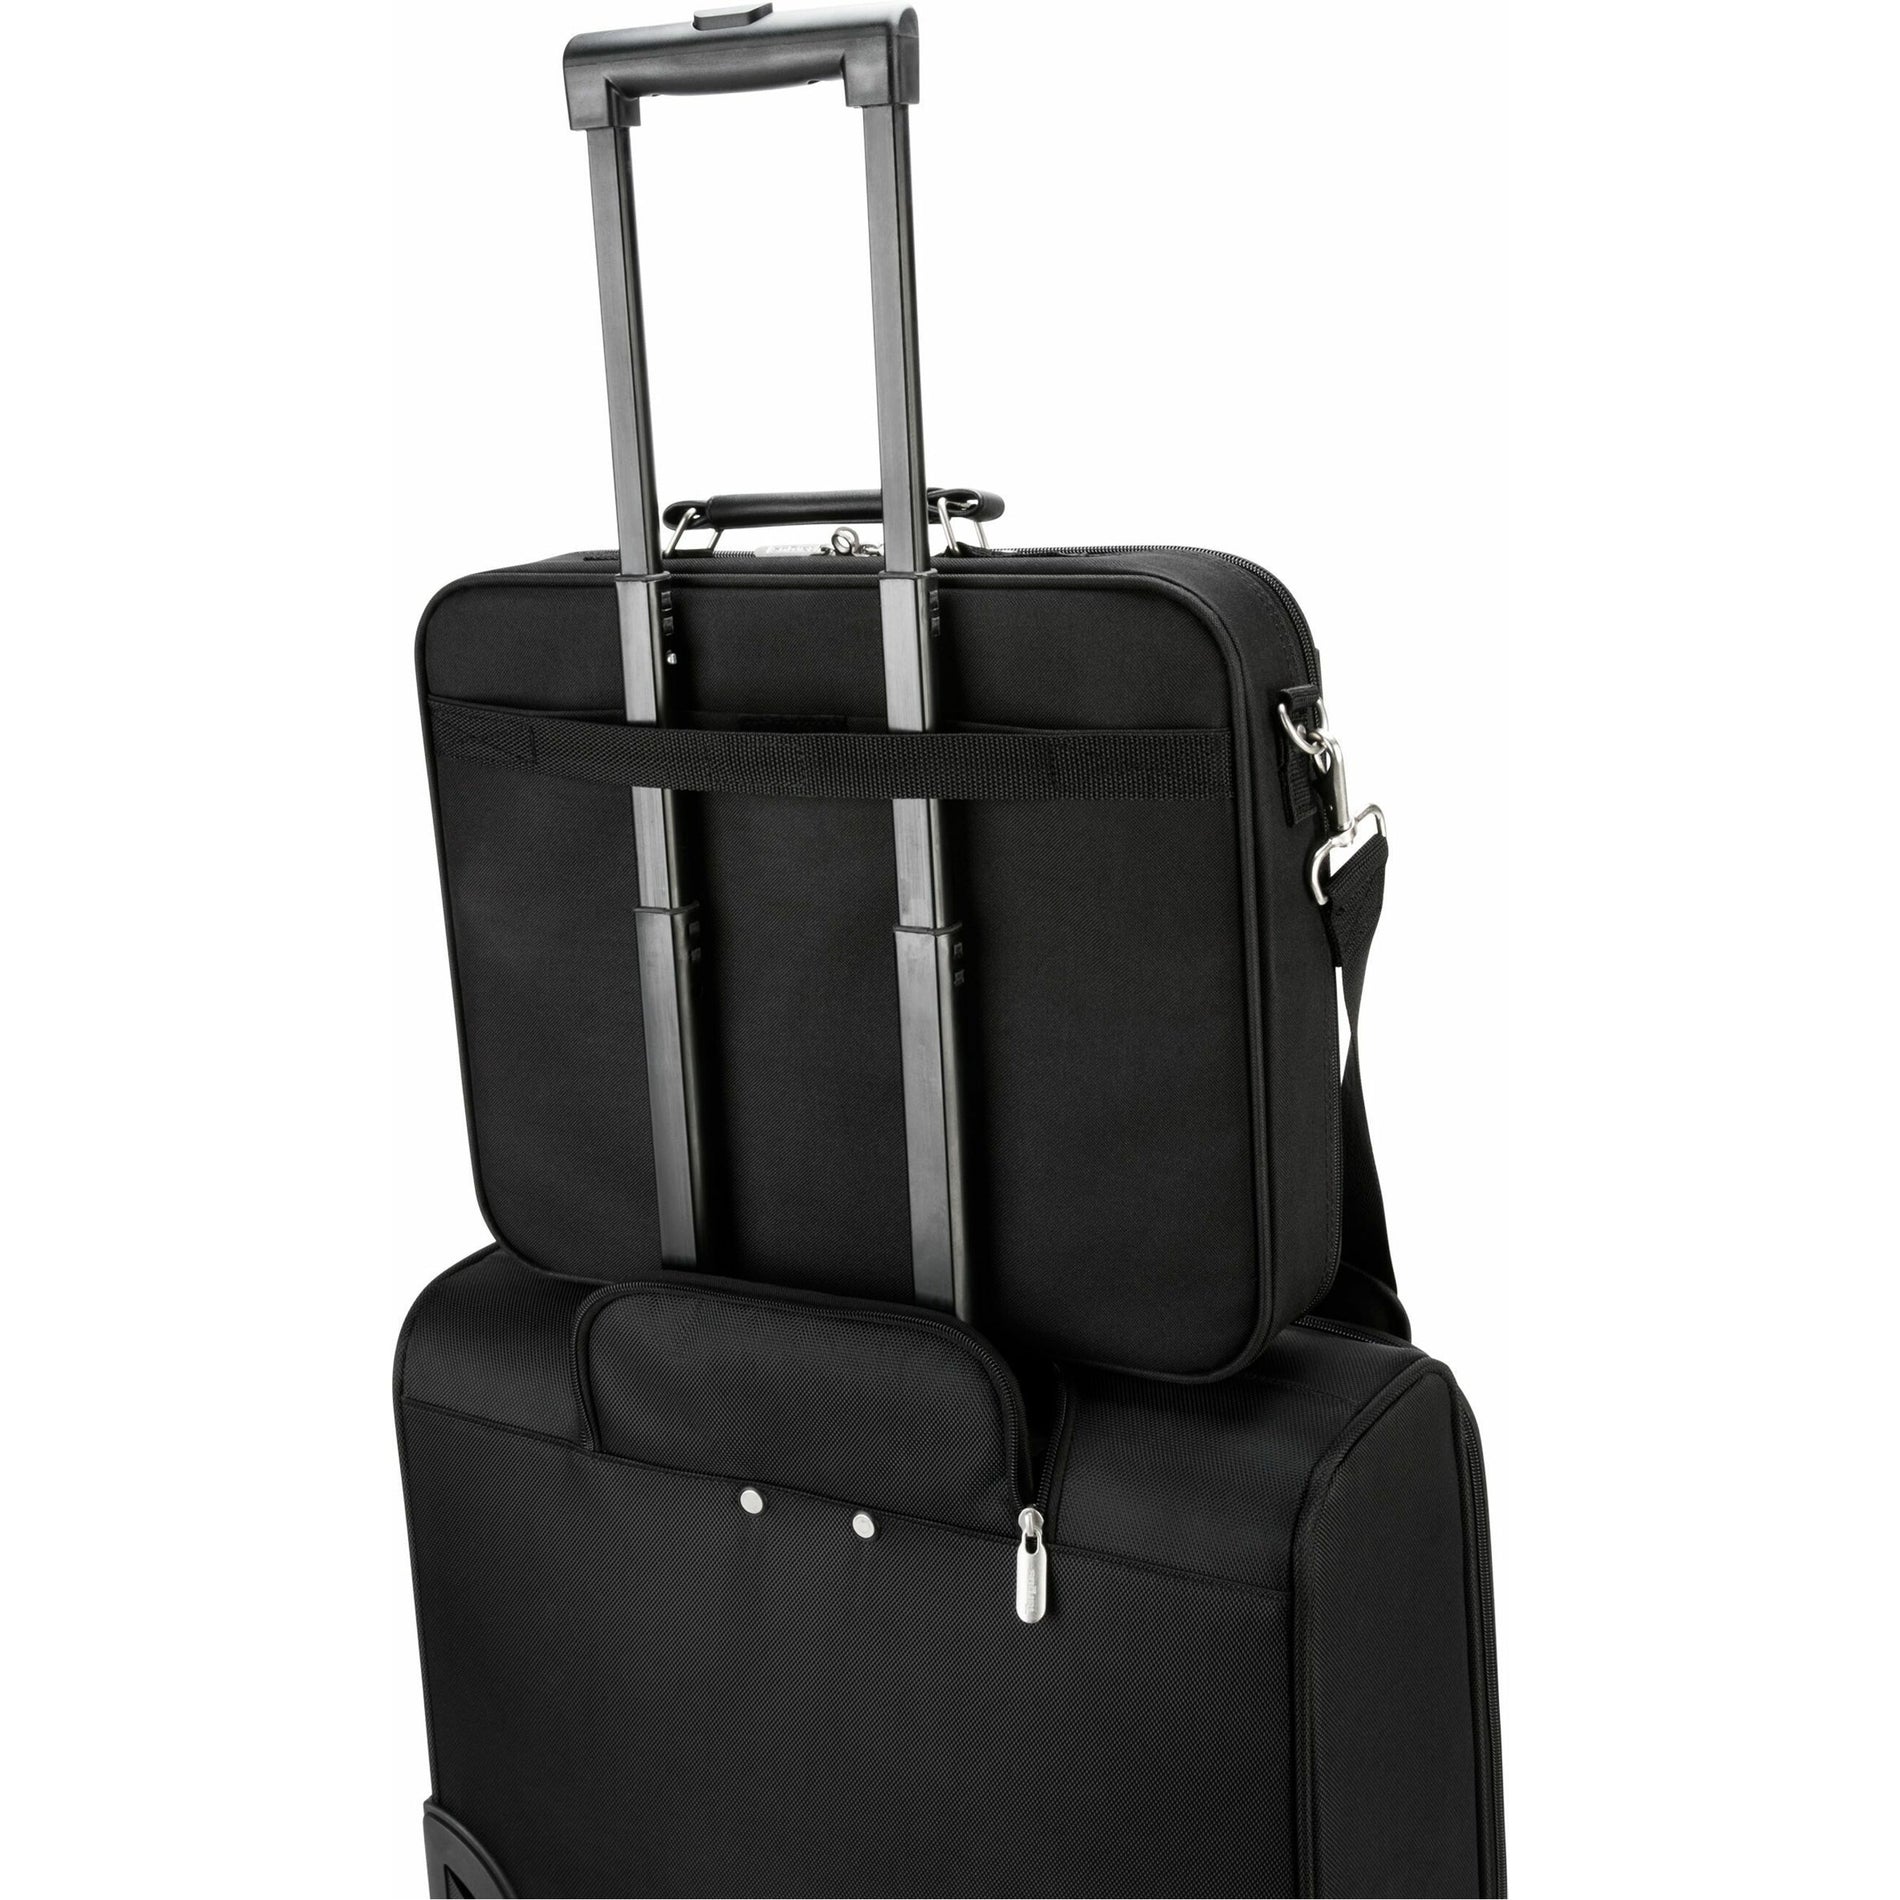 Targus OCN1 Notepac Carrying Case, Detachable Shoulder Strap, Black